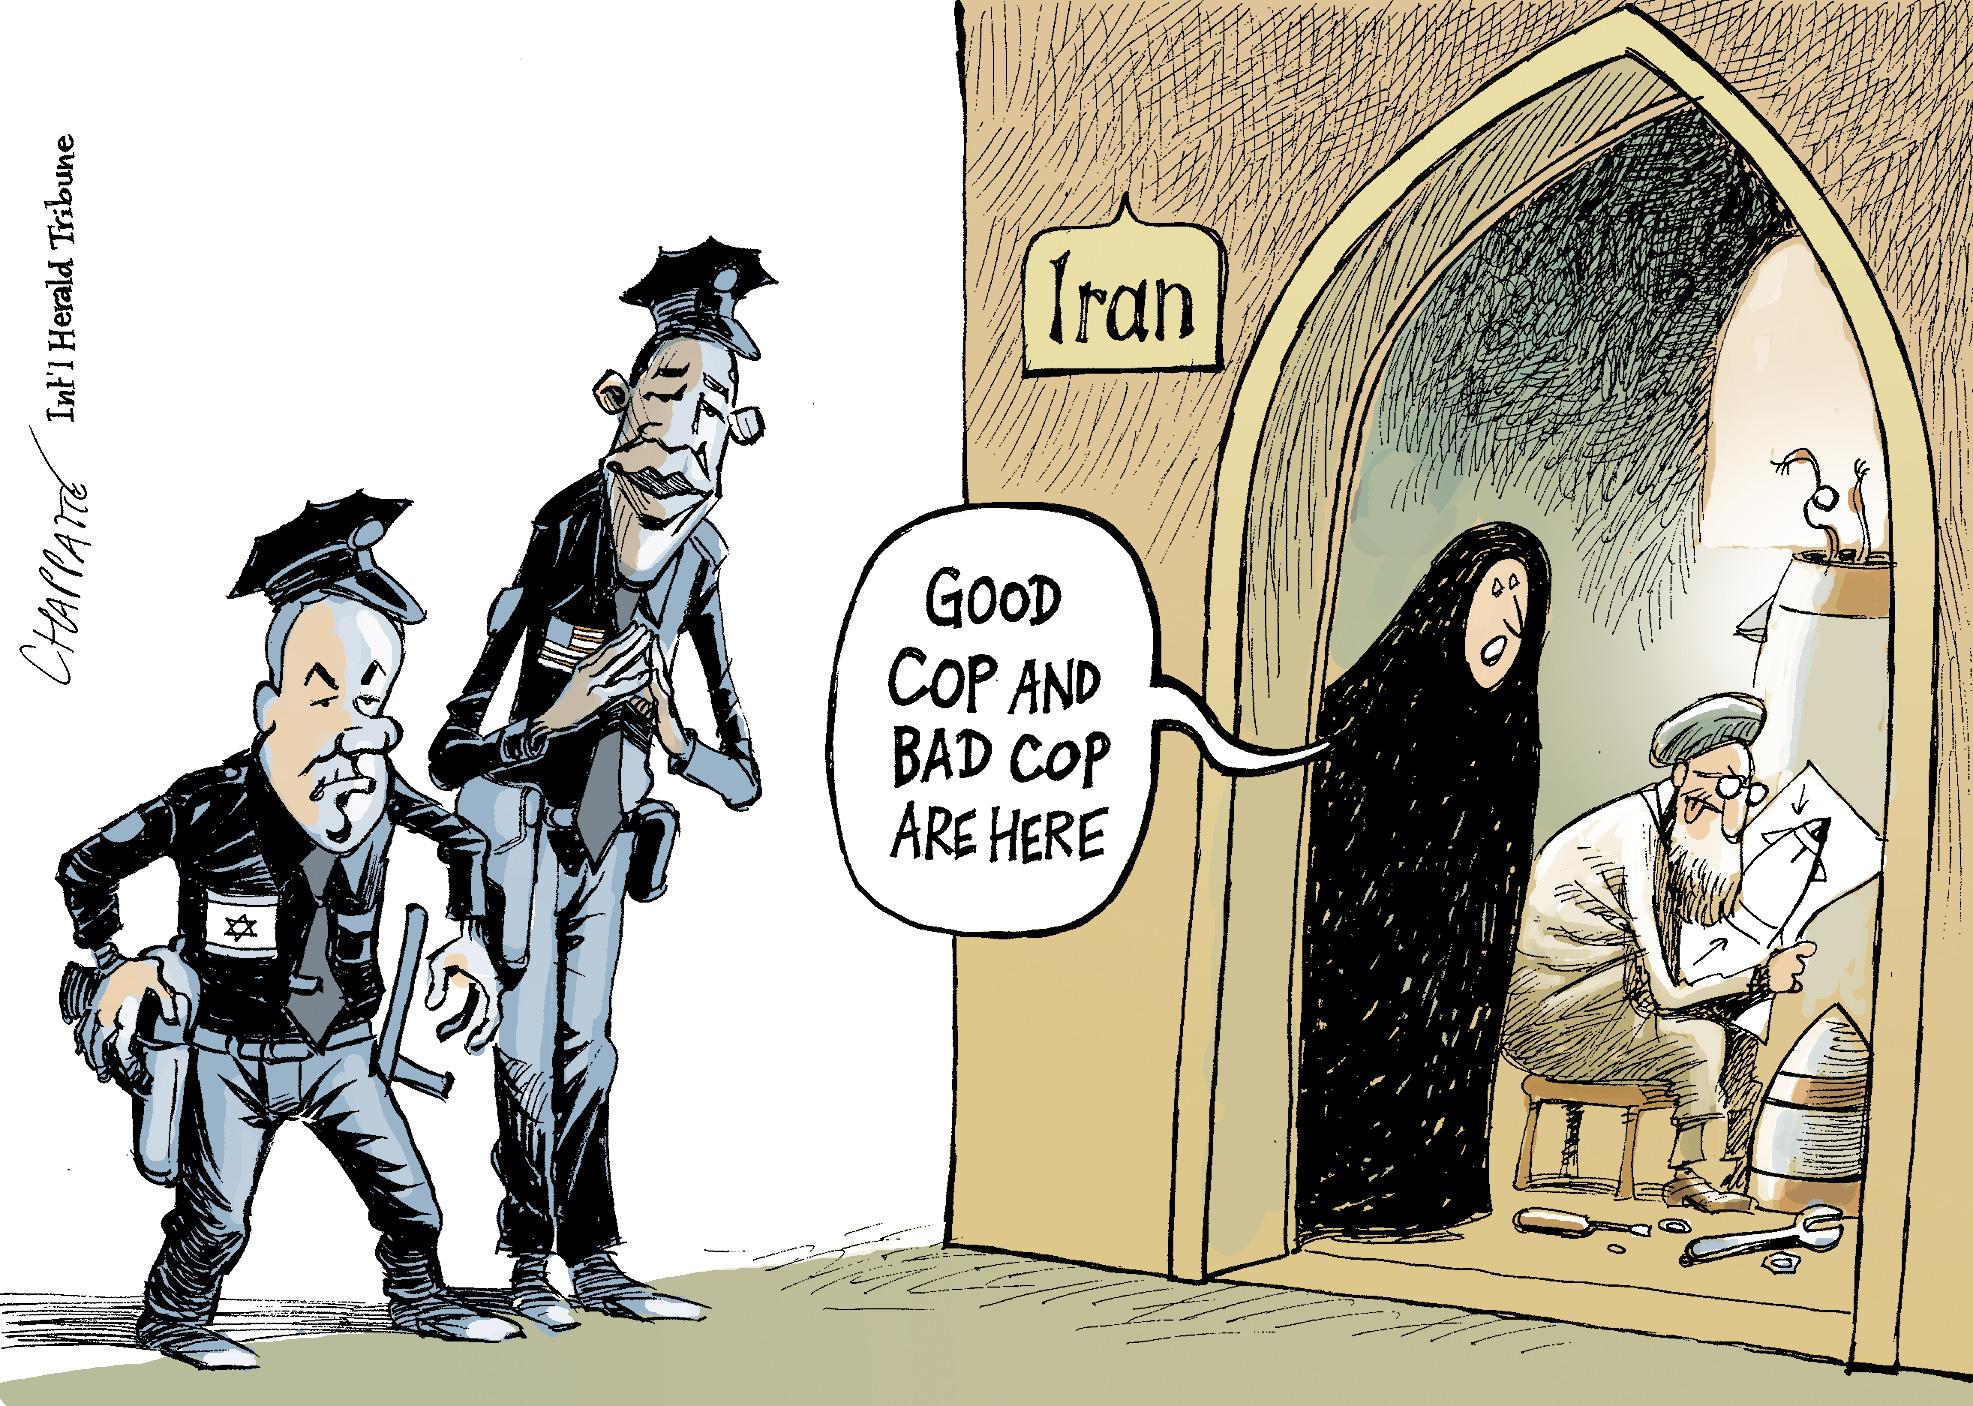 Pressure is building on Iran